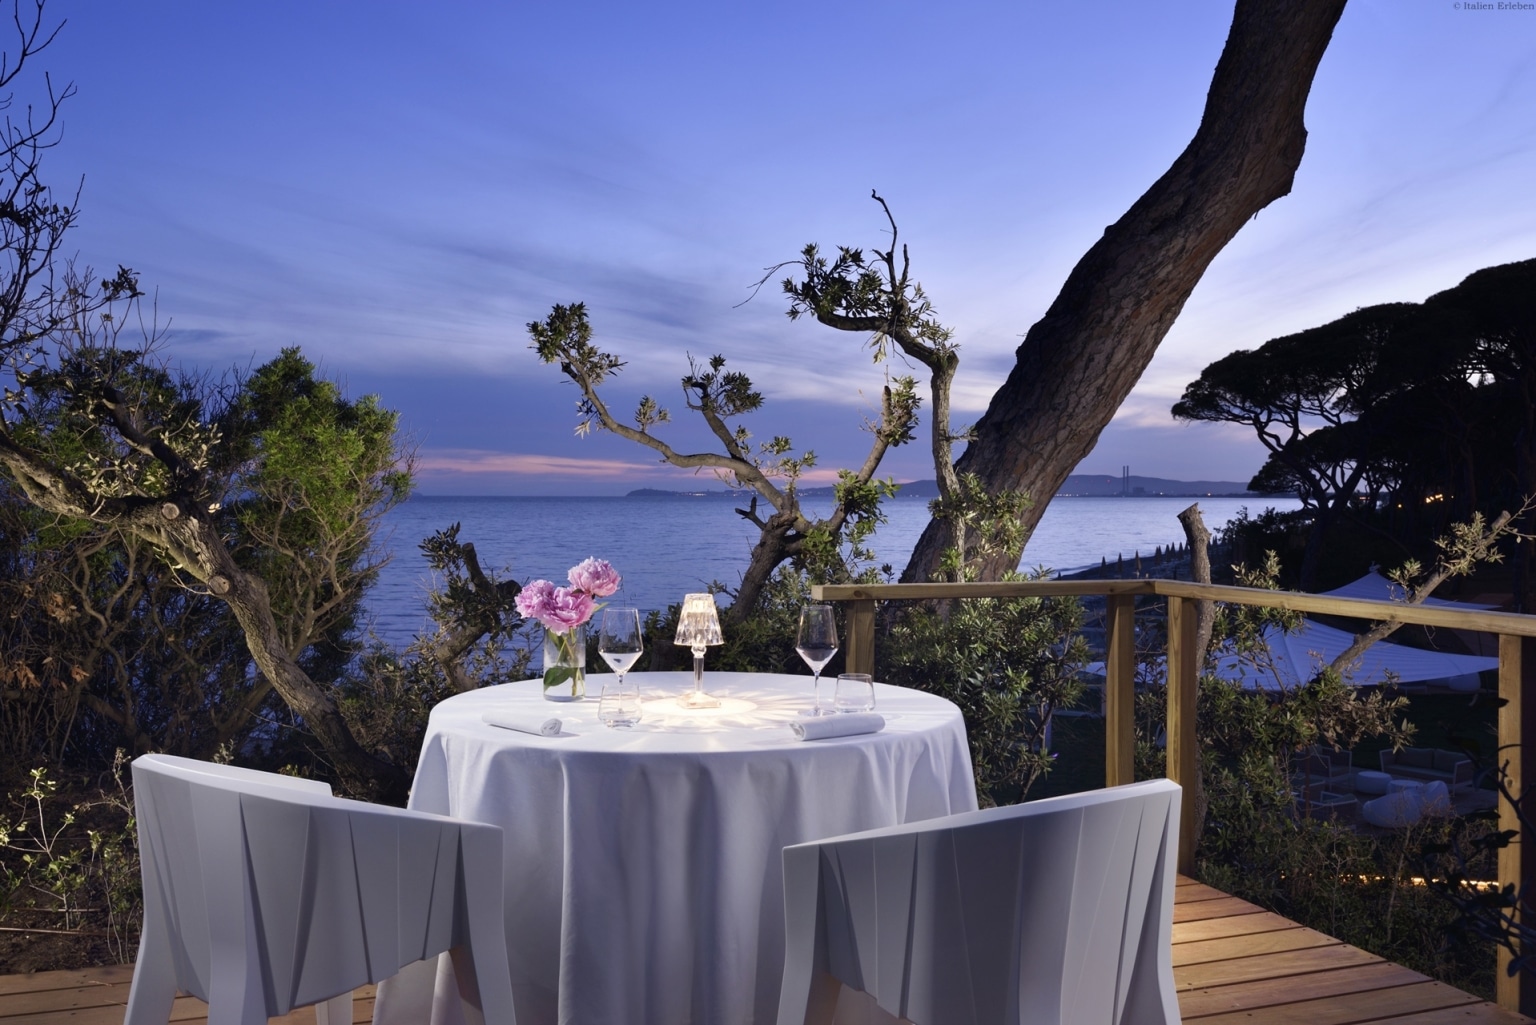 Toskana Hotel The Sense Experience Resort Follonica Maremma direkt Meer Pinien Strand Sand Pool Restaurant